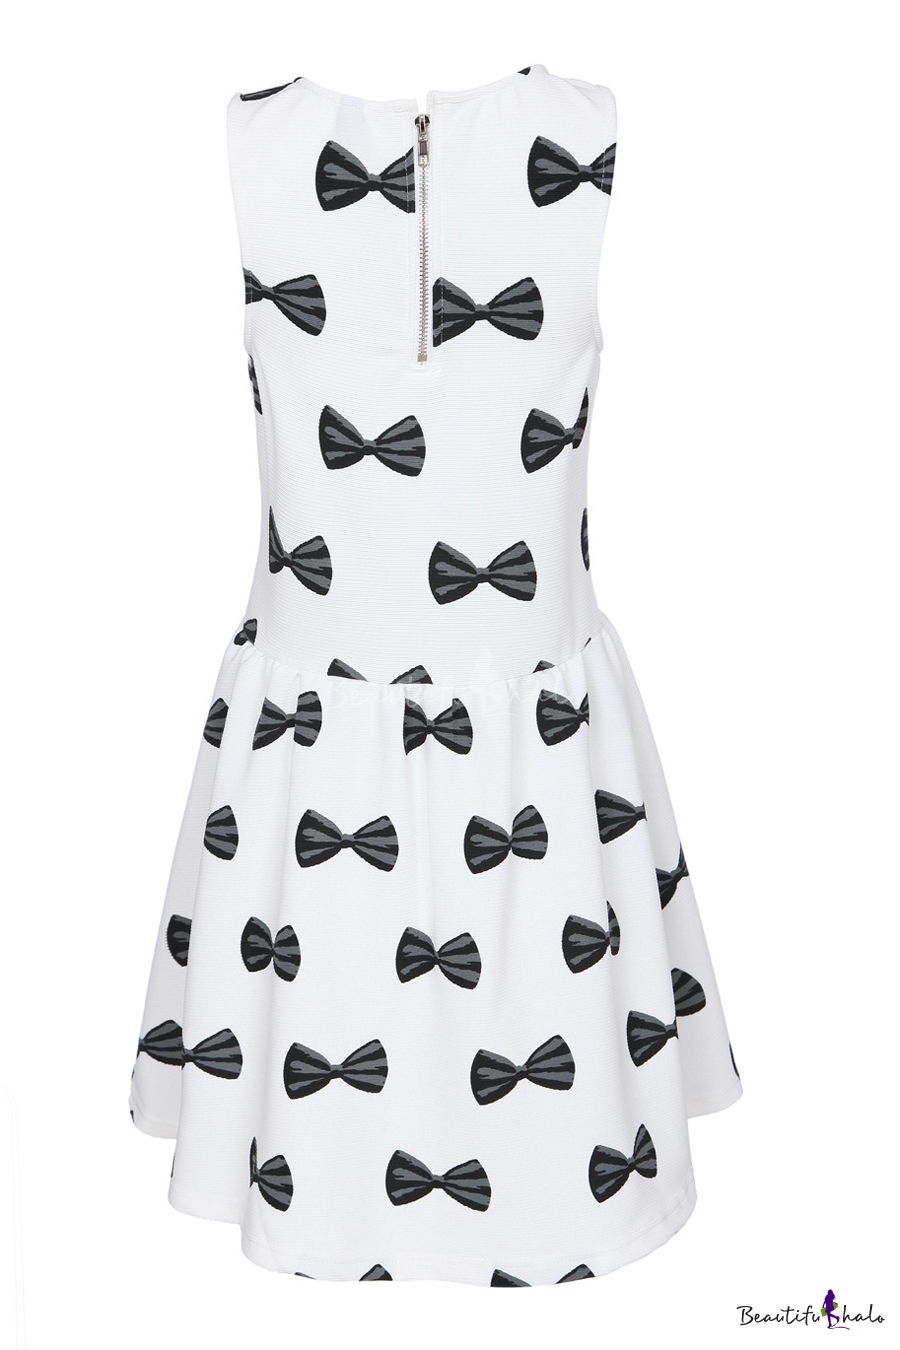 Black Bow Tie Print Sleeveless A-line White Mini Dress - Beautifulhalo.com